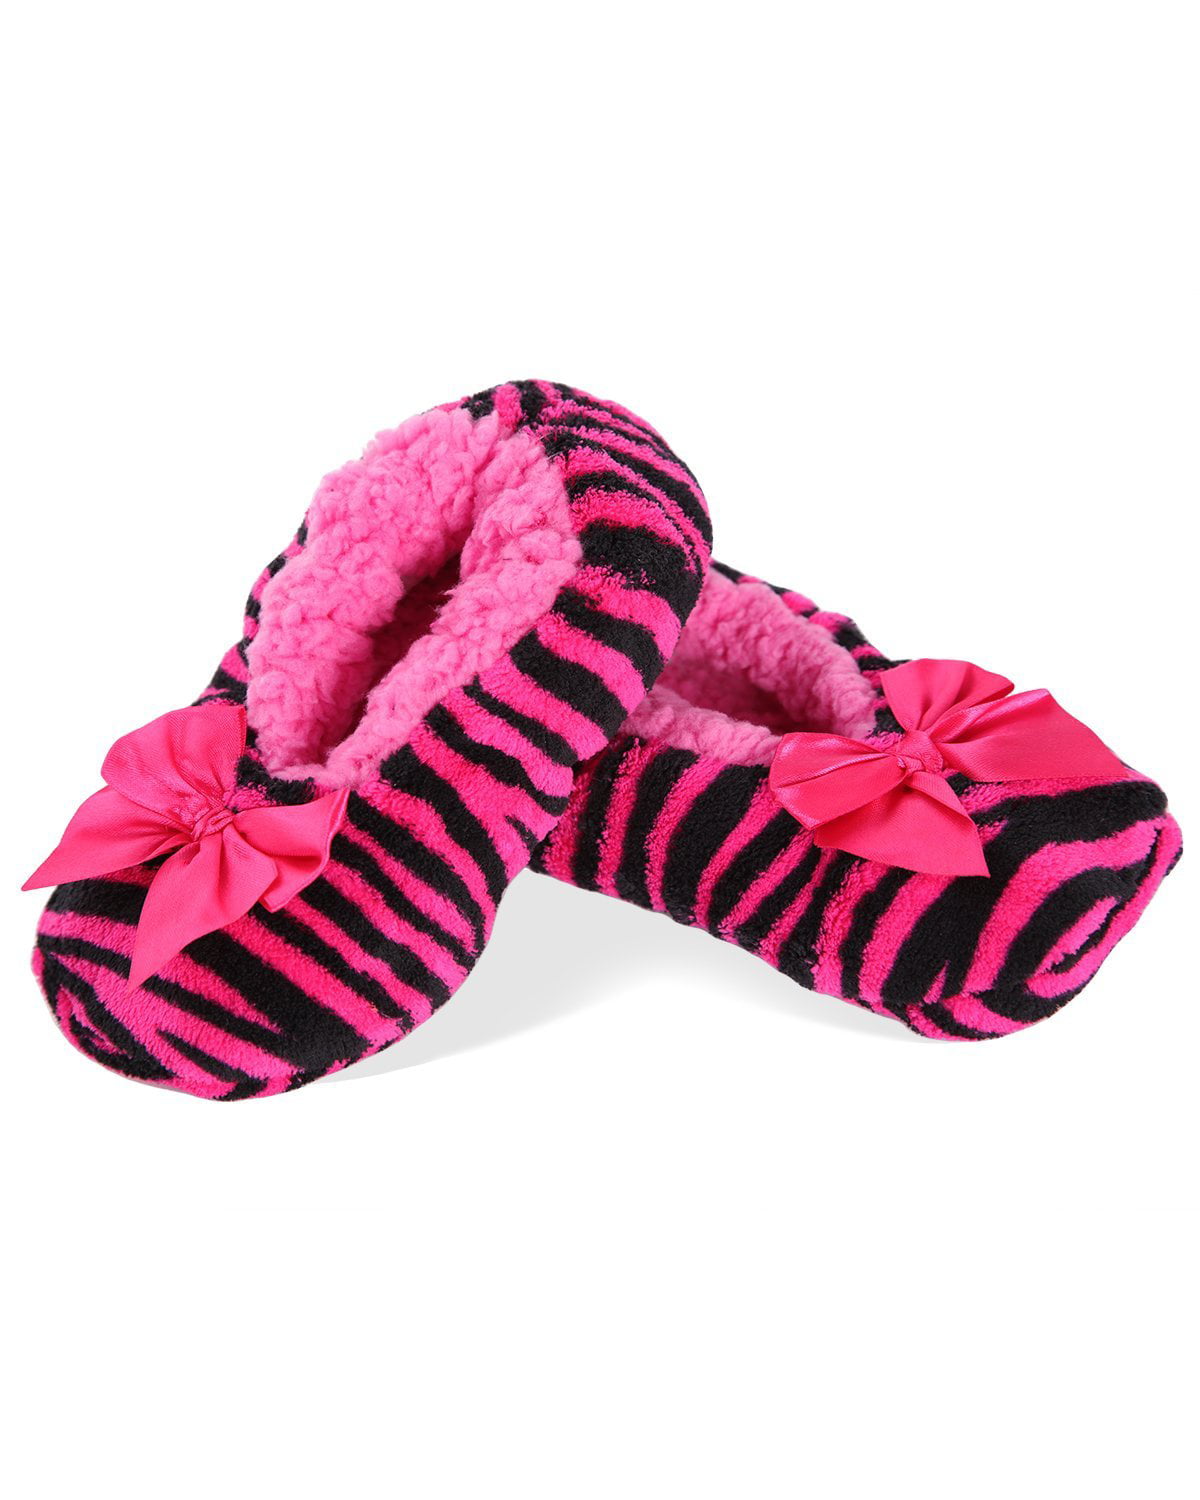 MeMoi - MeMoi Girls Zebra Slippers | Slippers for Kids and Girls Slippers  by MeMoi Large / Fuchsia - Walmart.com - Walmart.com